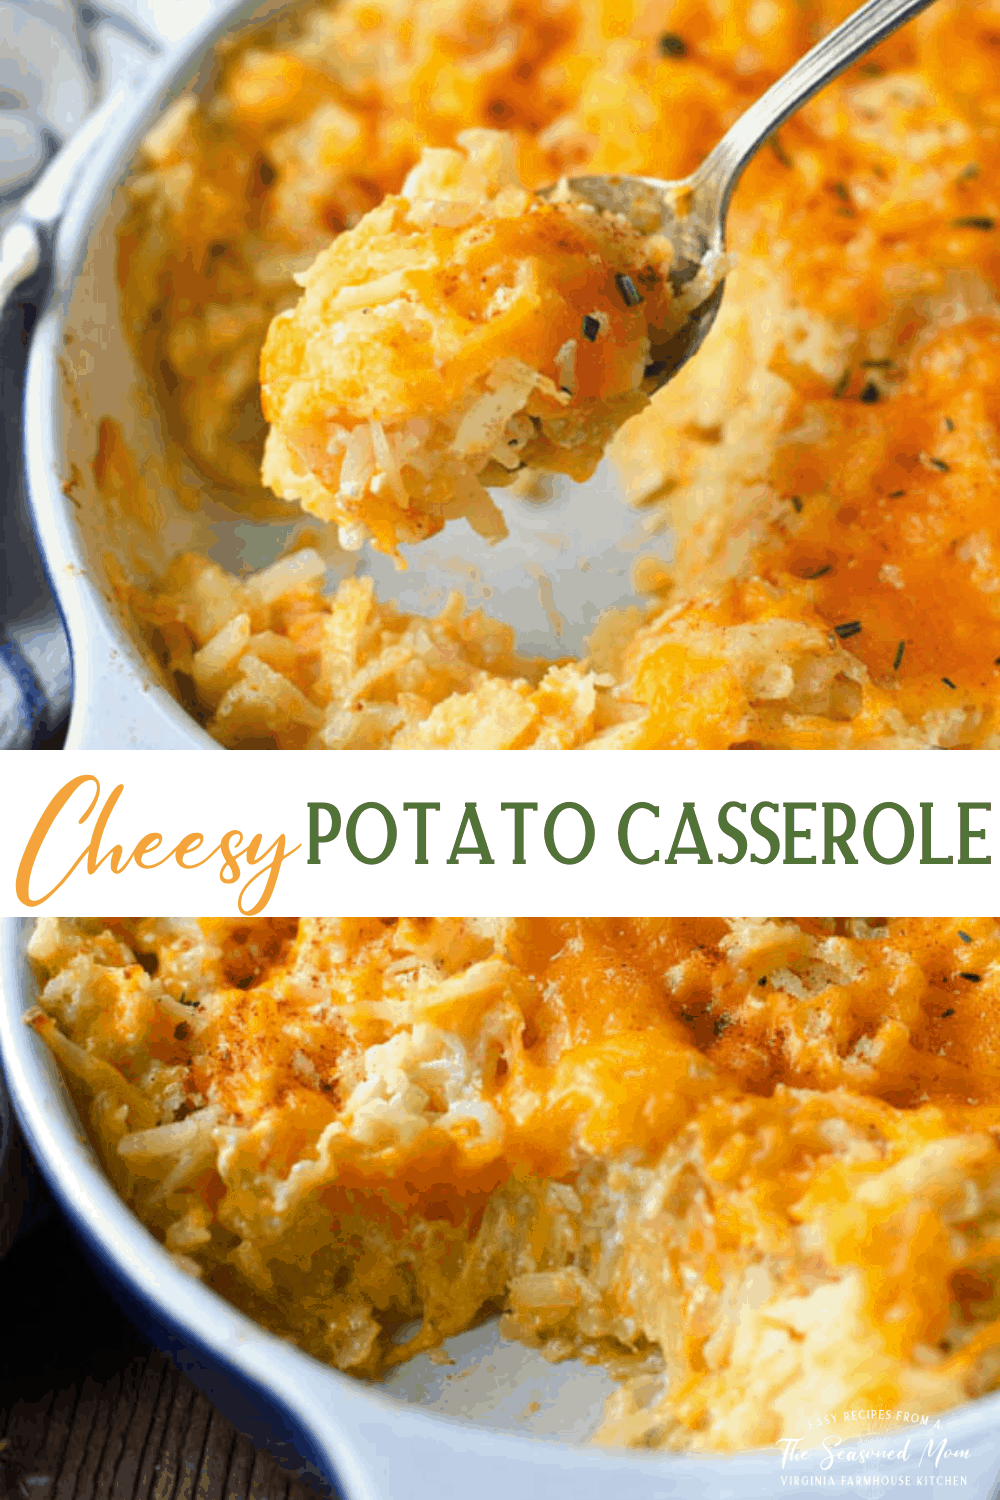 Aunt Bee's Cheesy Potato Casserole (3 Ingredients!) - The Seasoned Mom